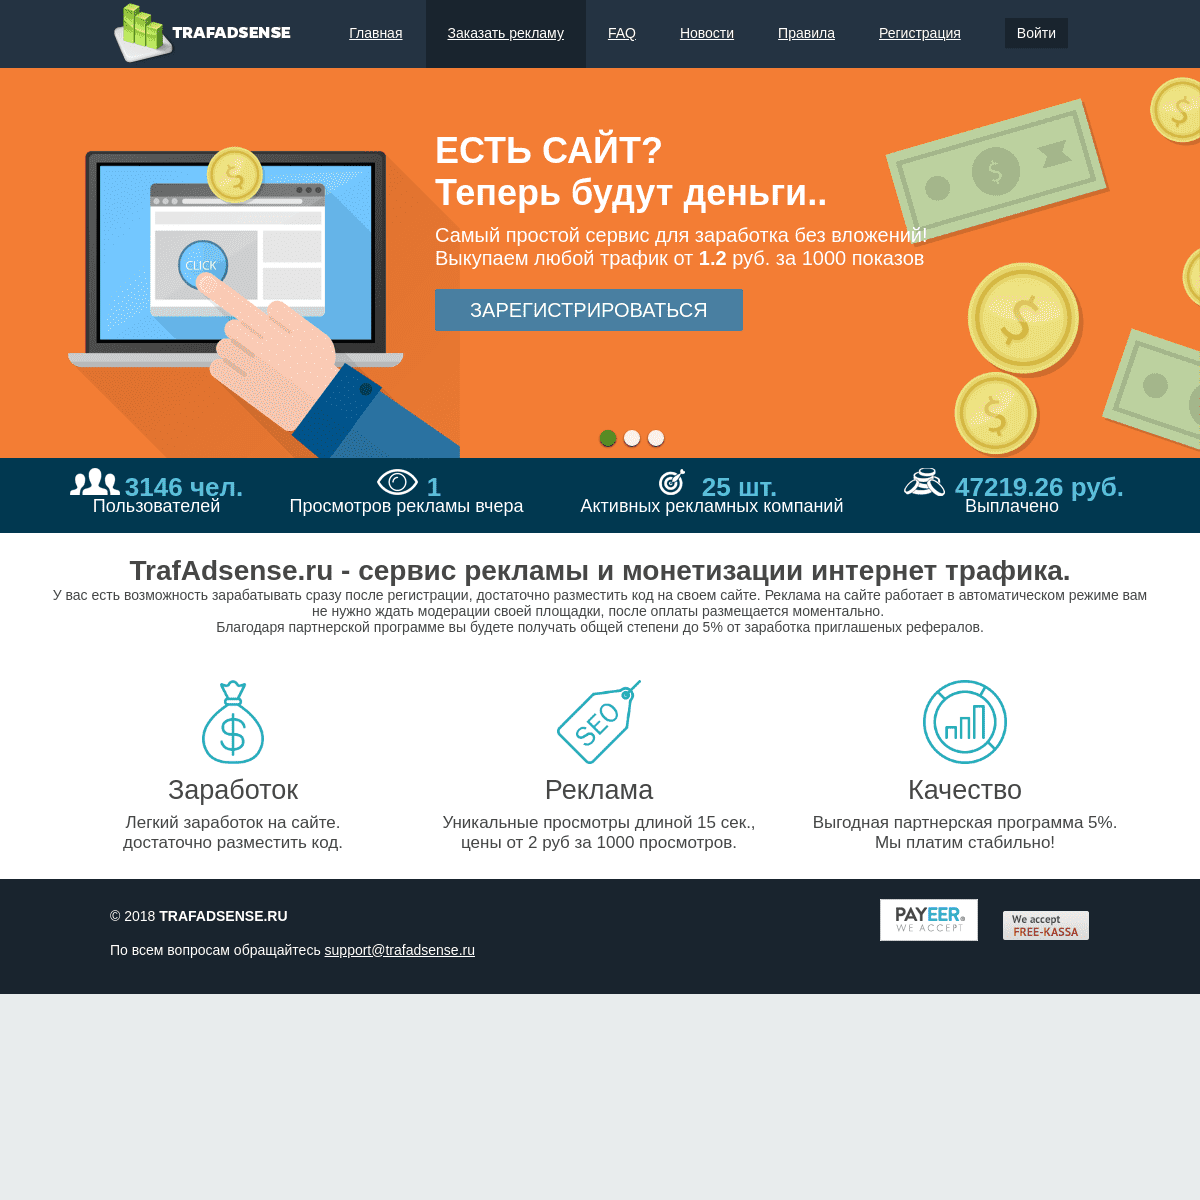 TrafAdsense.ru - Сервис интернет-рекламы